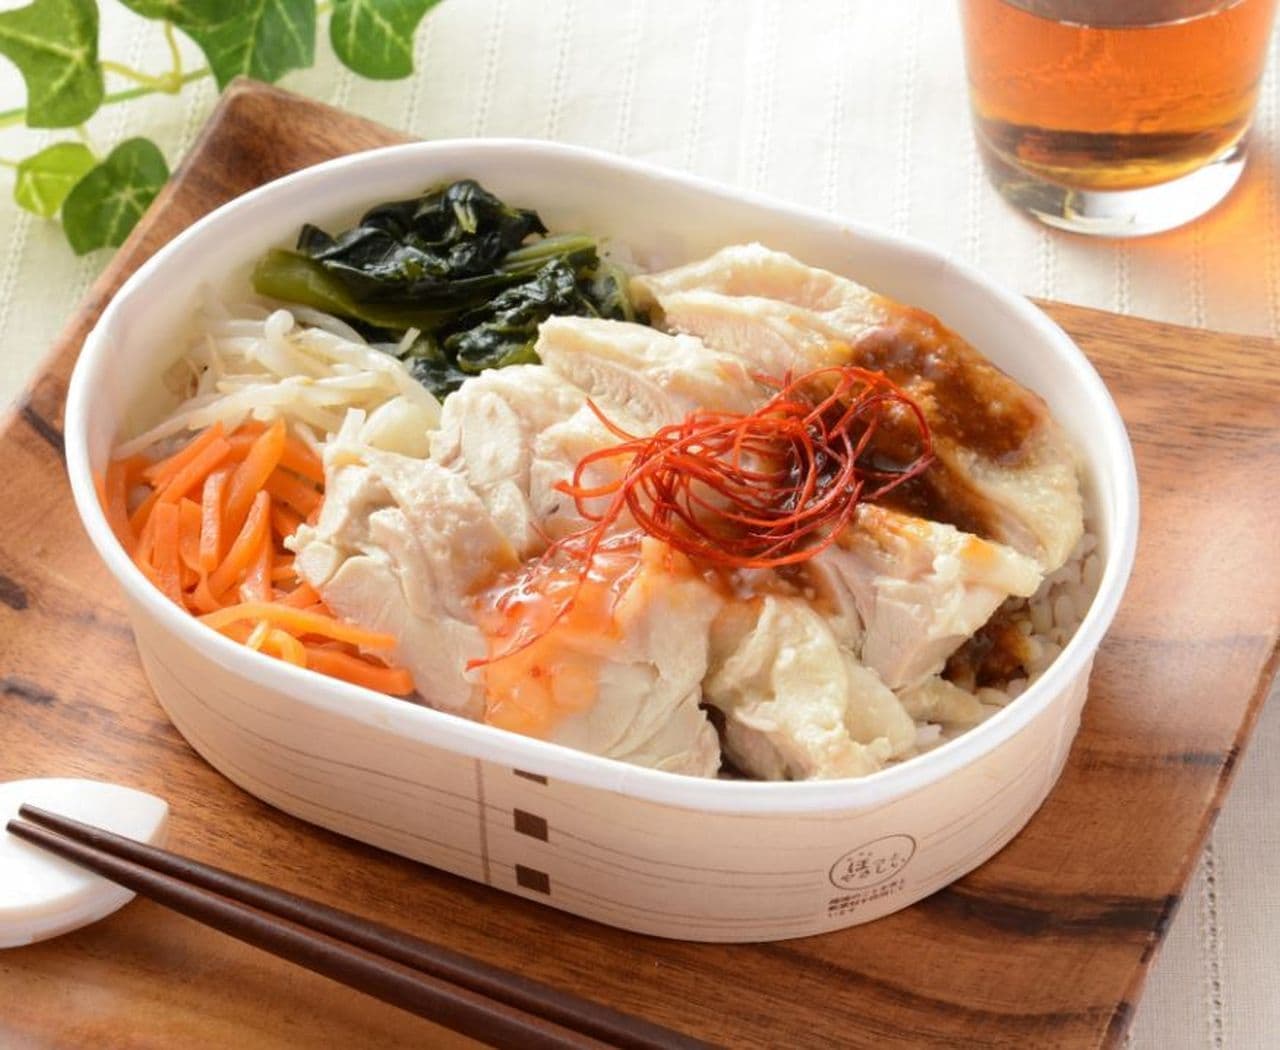 Natural Lawson "Hainan Chicken Rice Wappa-style Bento"